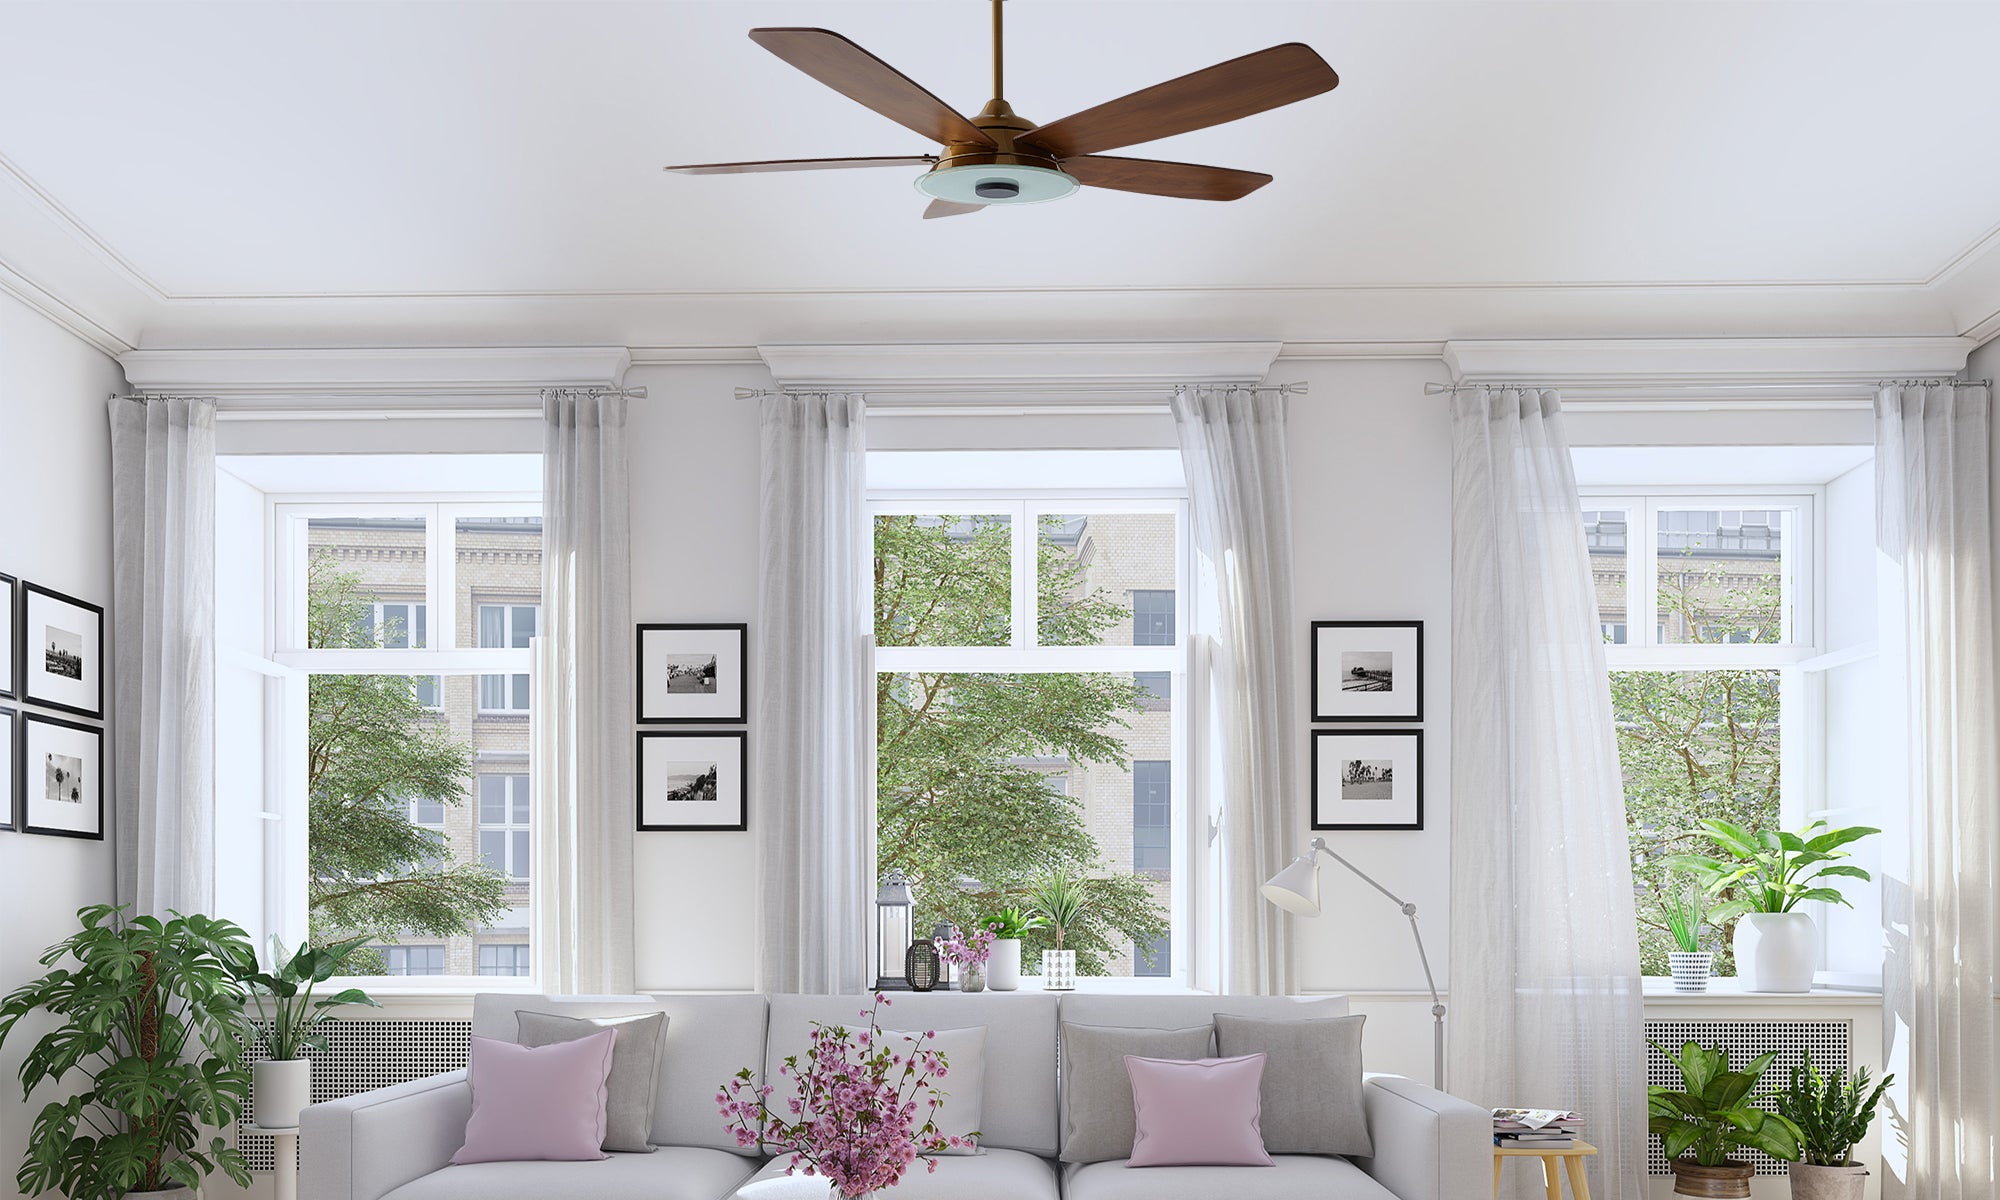 52inch downrod mounting striker ceiling fan in elegant living room